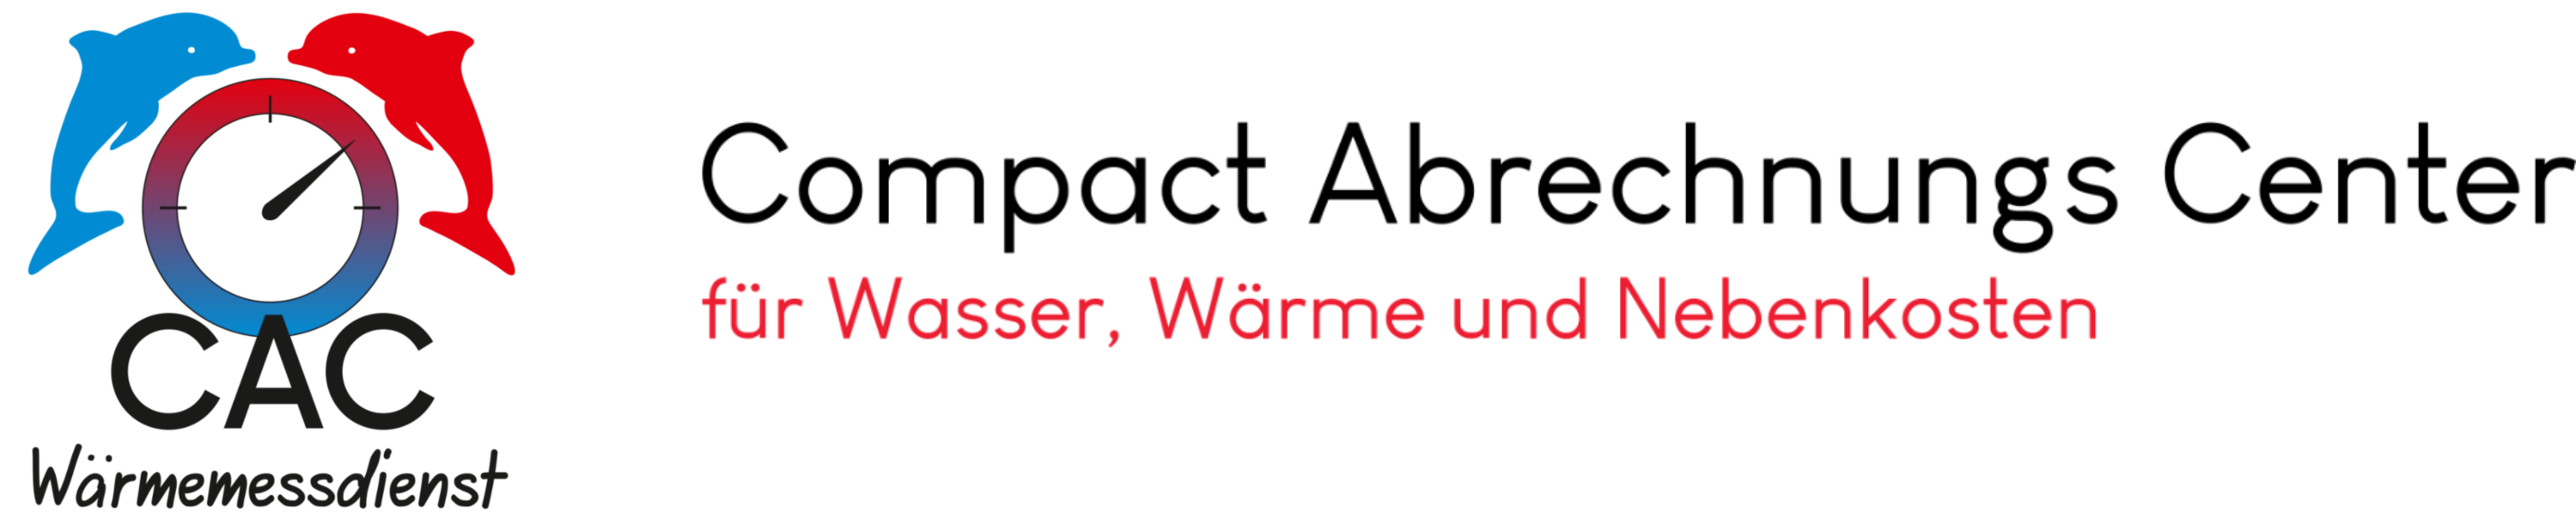 CAC Wärmemessdienst GmbH